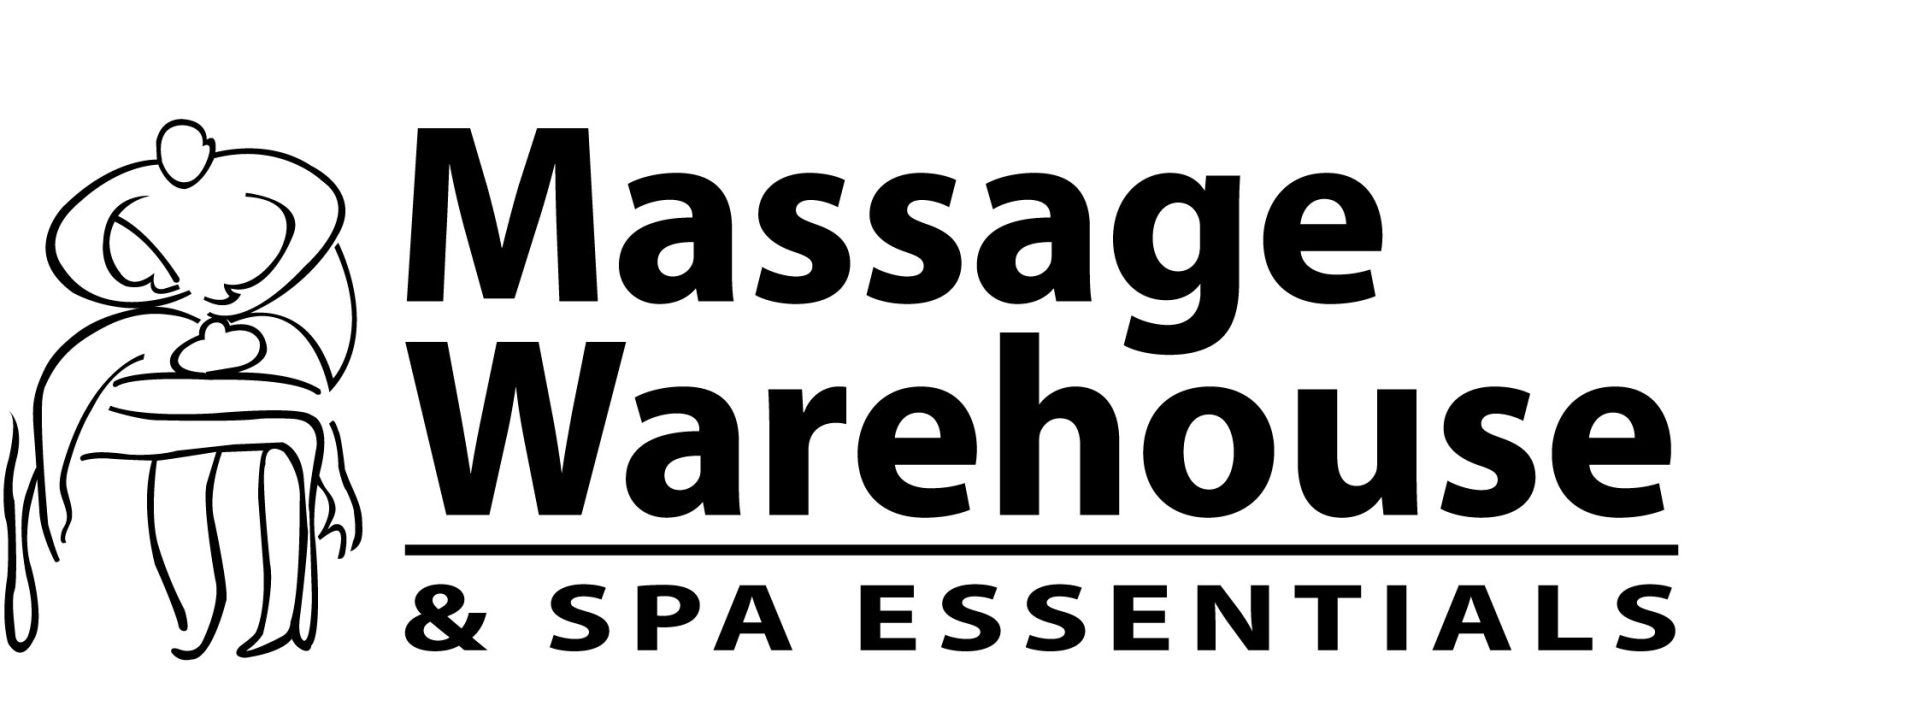 Massage Warehouse Awards Ultimate New Graduate Honor to Rebecca Tatro, MASSAGE Magazine